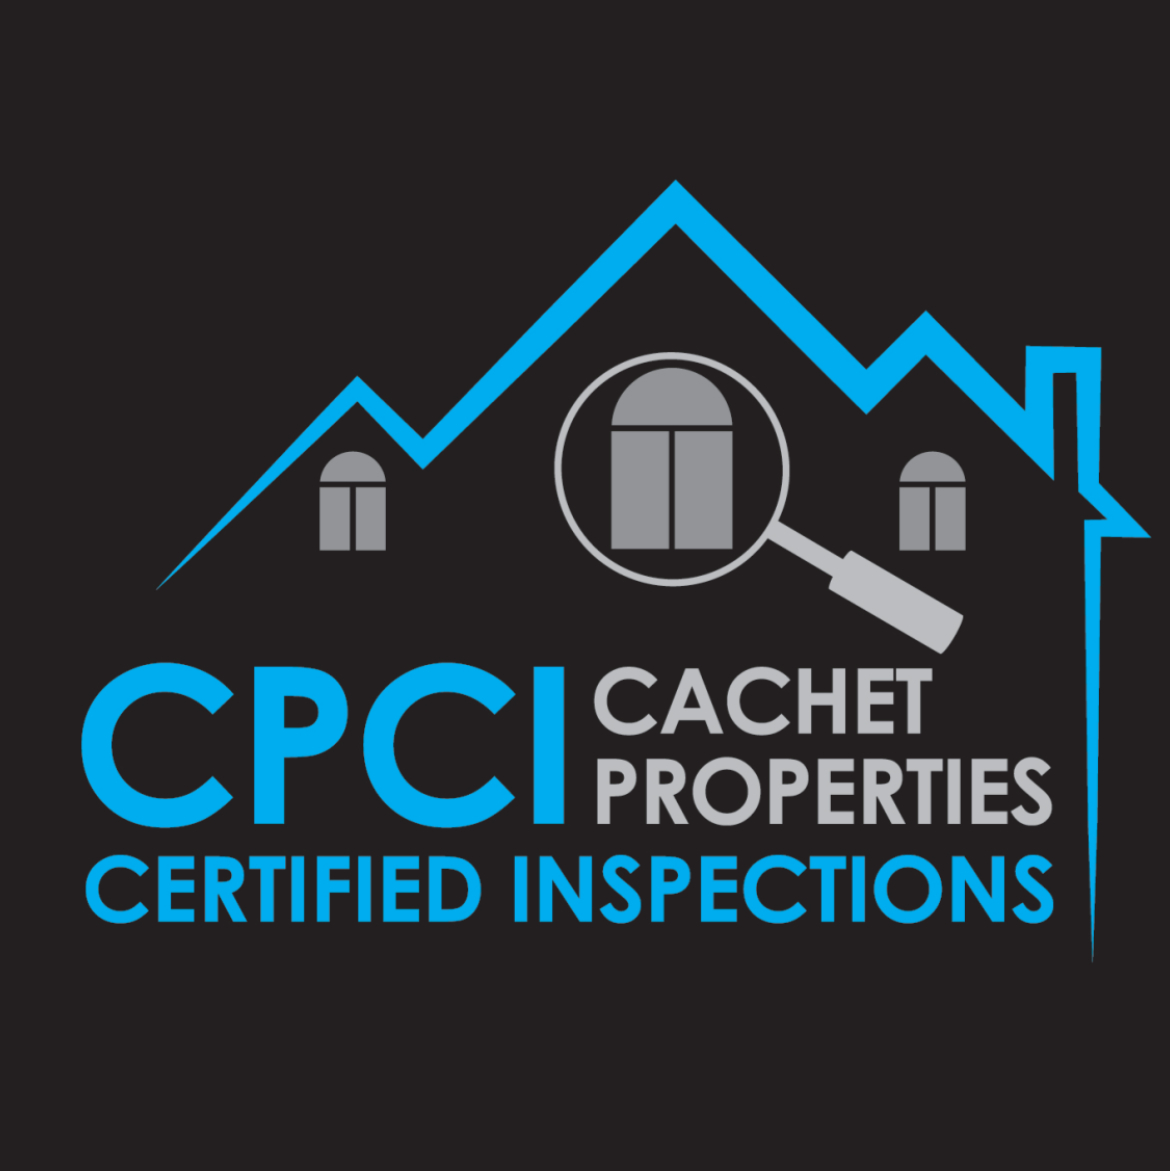 Cachet Properties Certified Inspections - Inspection de maisons